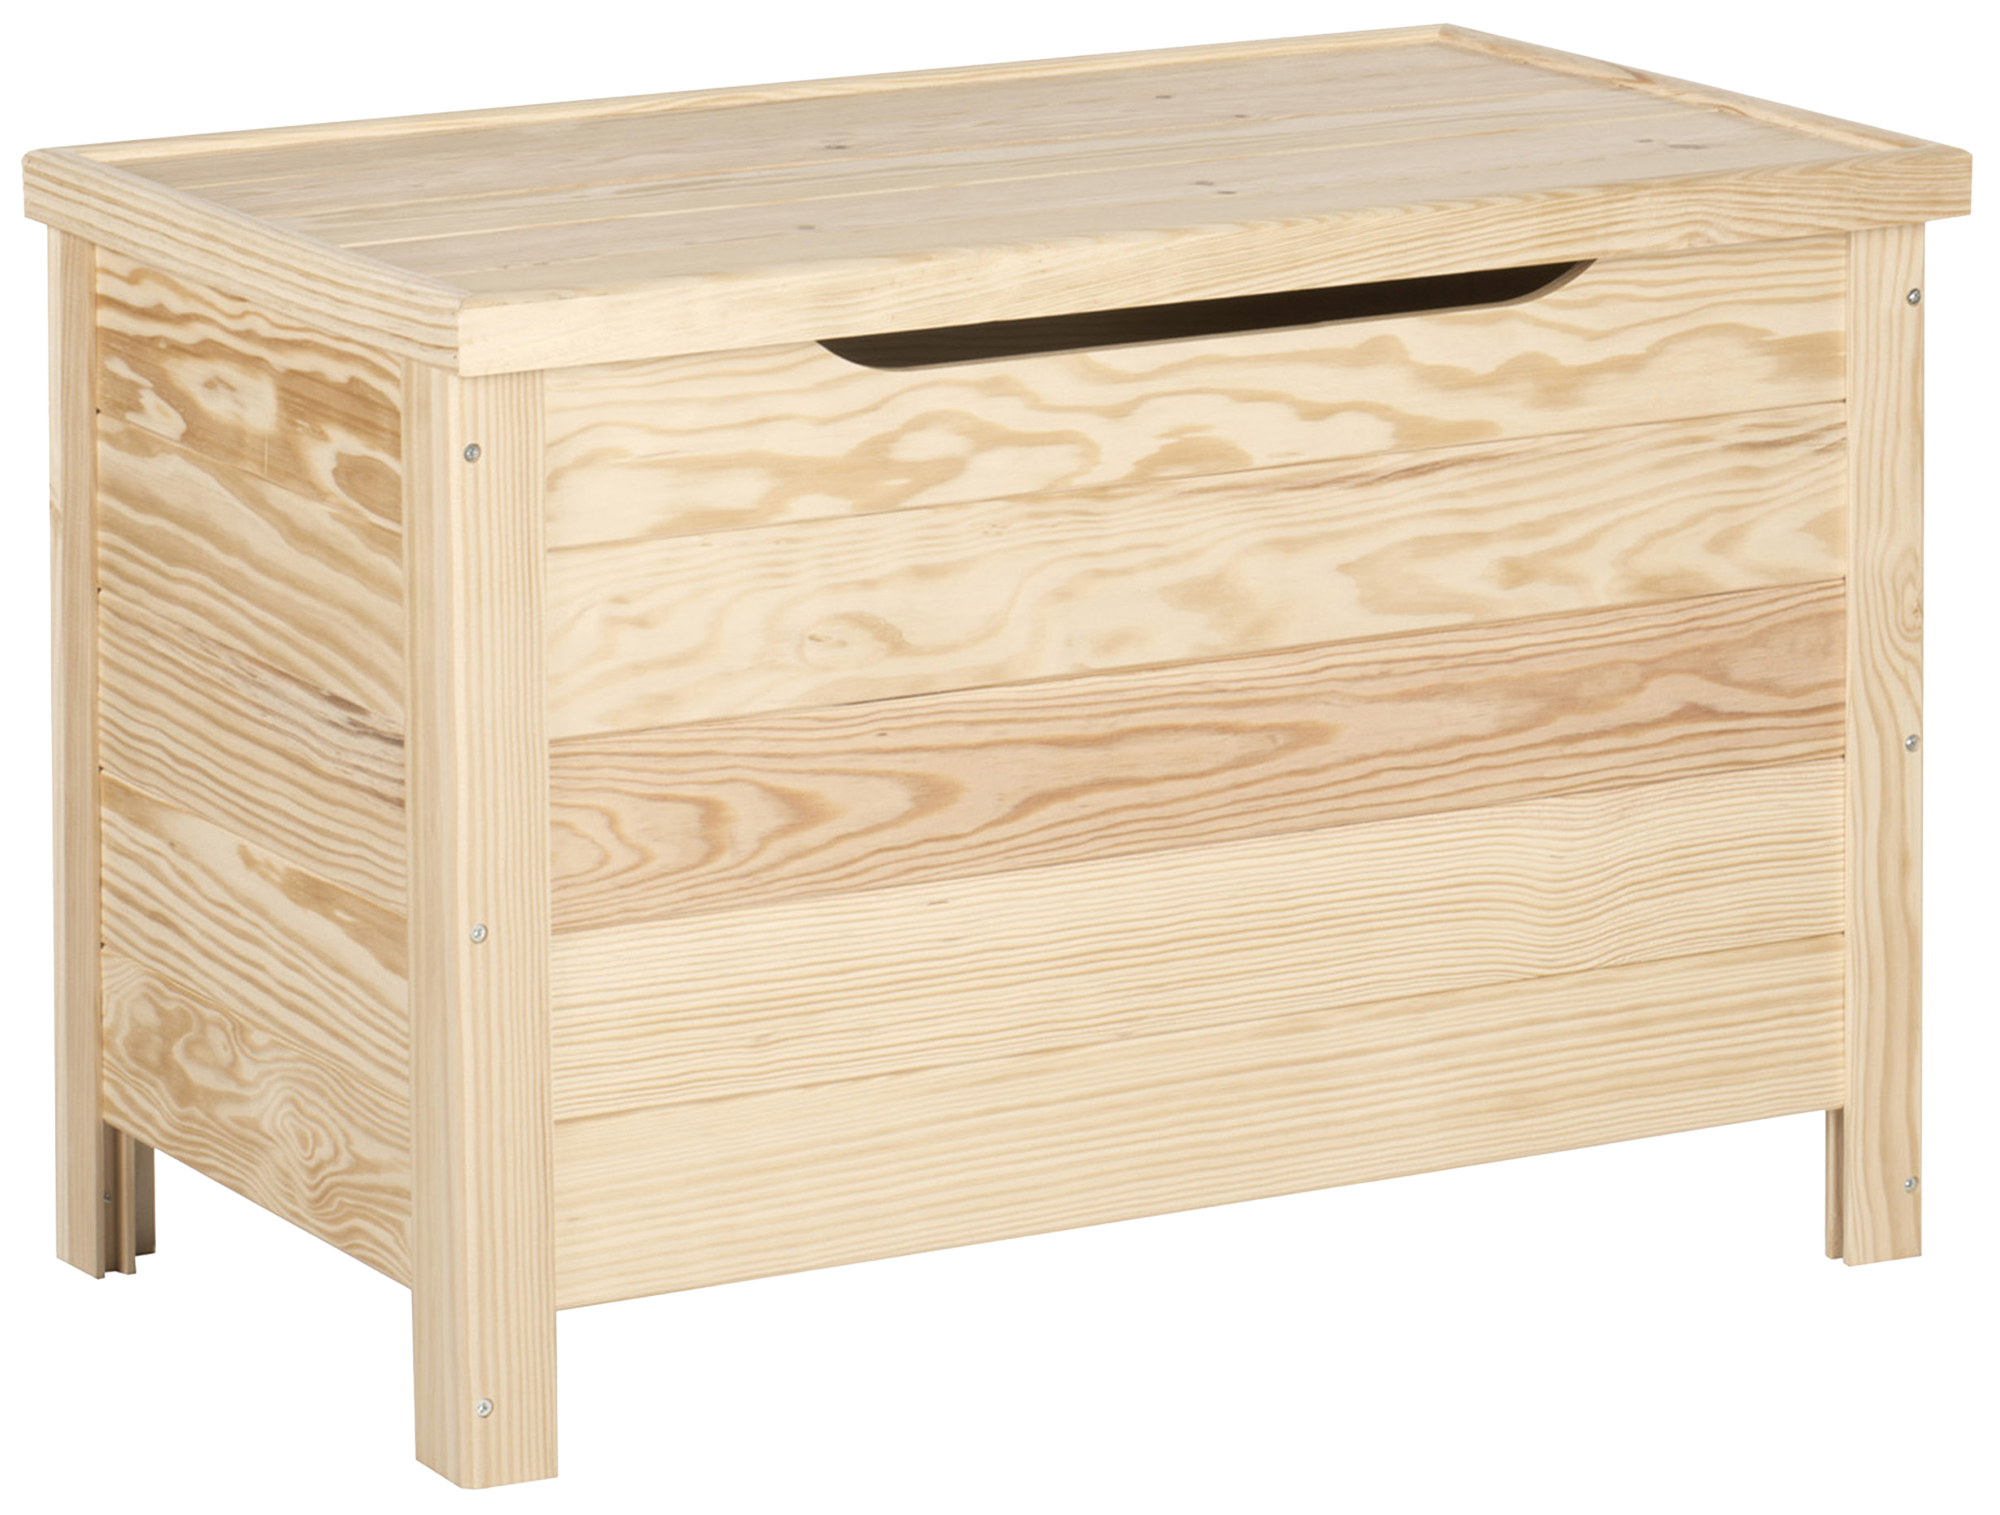 Baúl de madera de 48x70x40 cm y capacidad de 85l